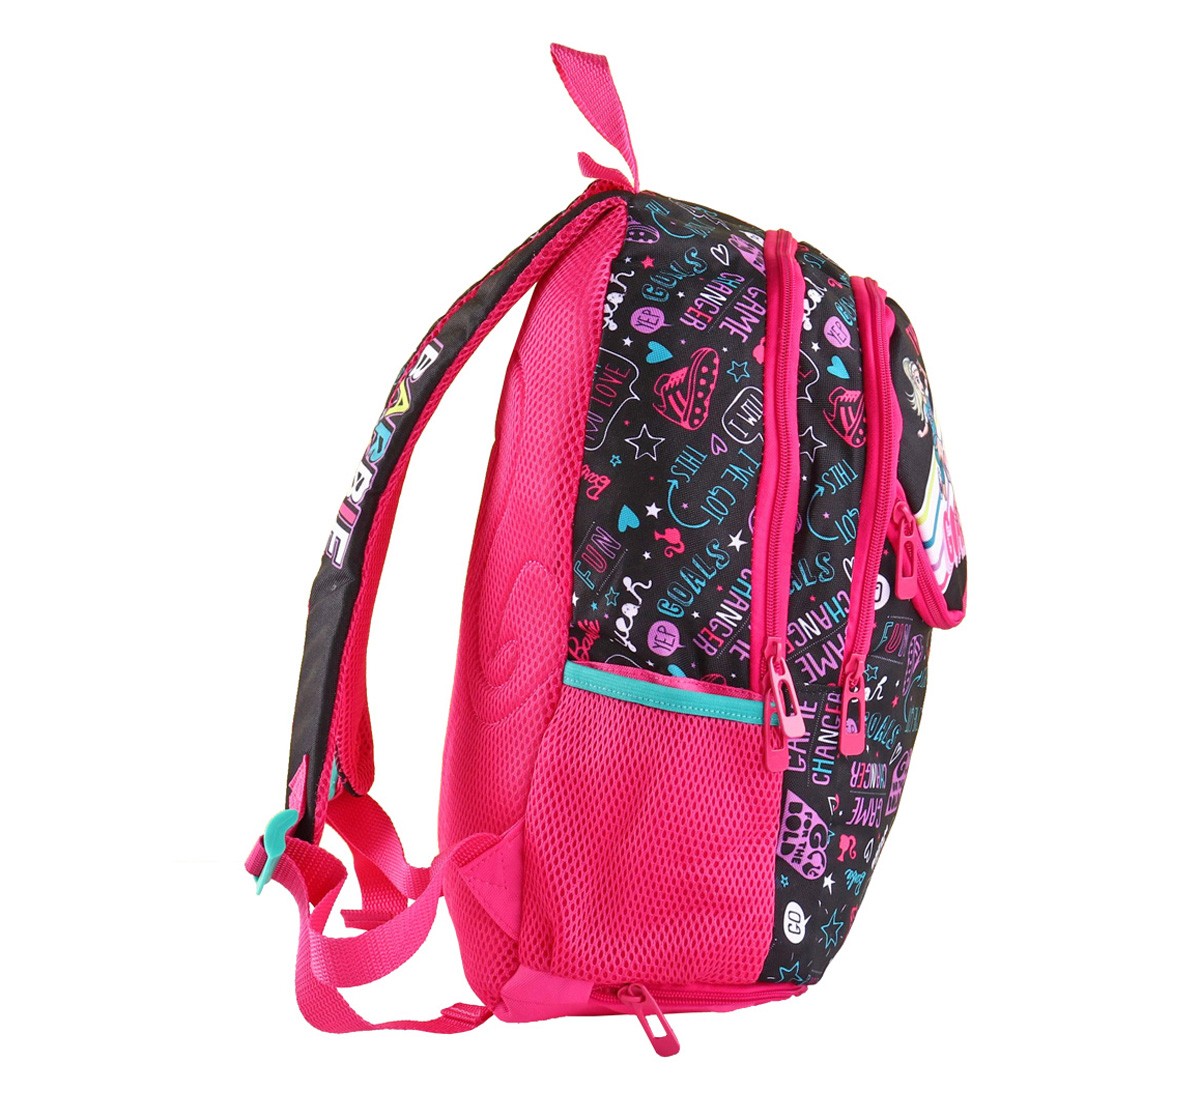 Barbie School Bag with Lunch Compartment 43 cm Multicolor 6Y+